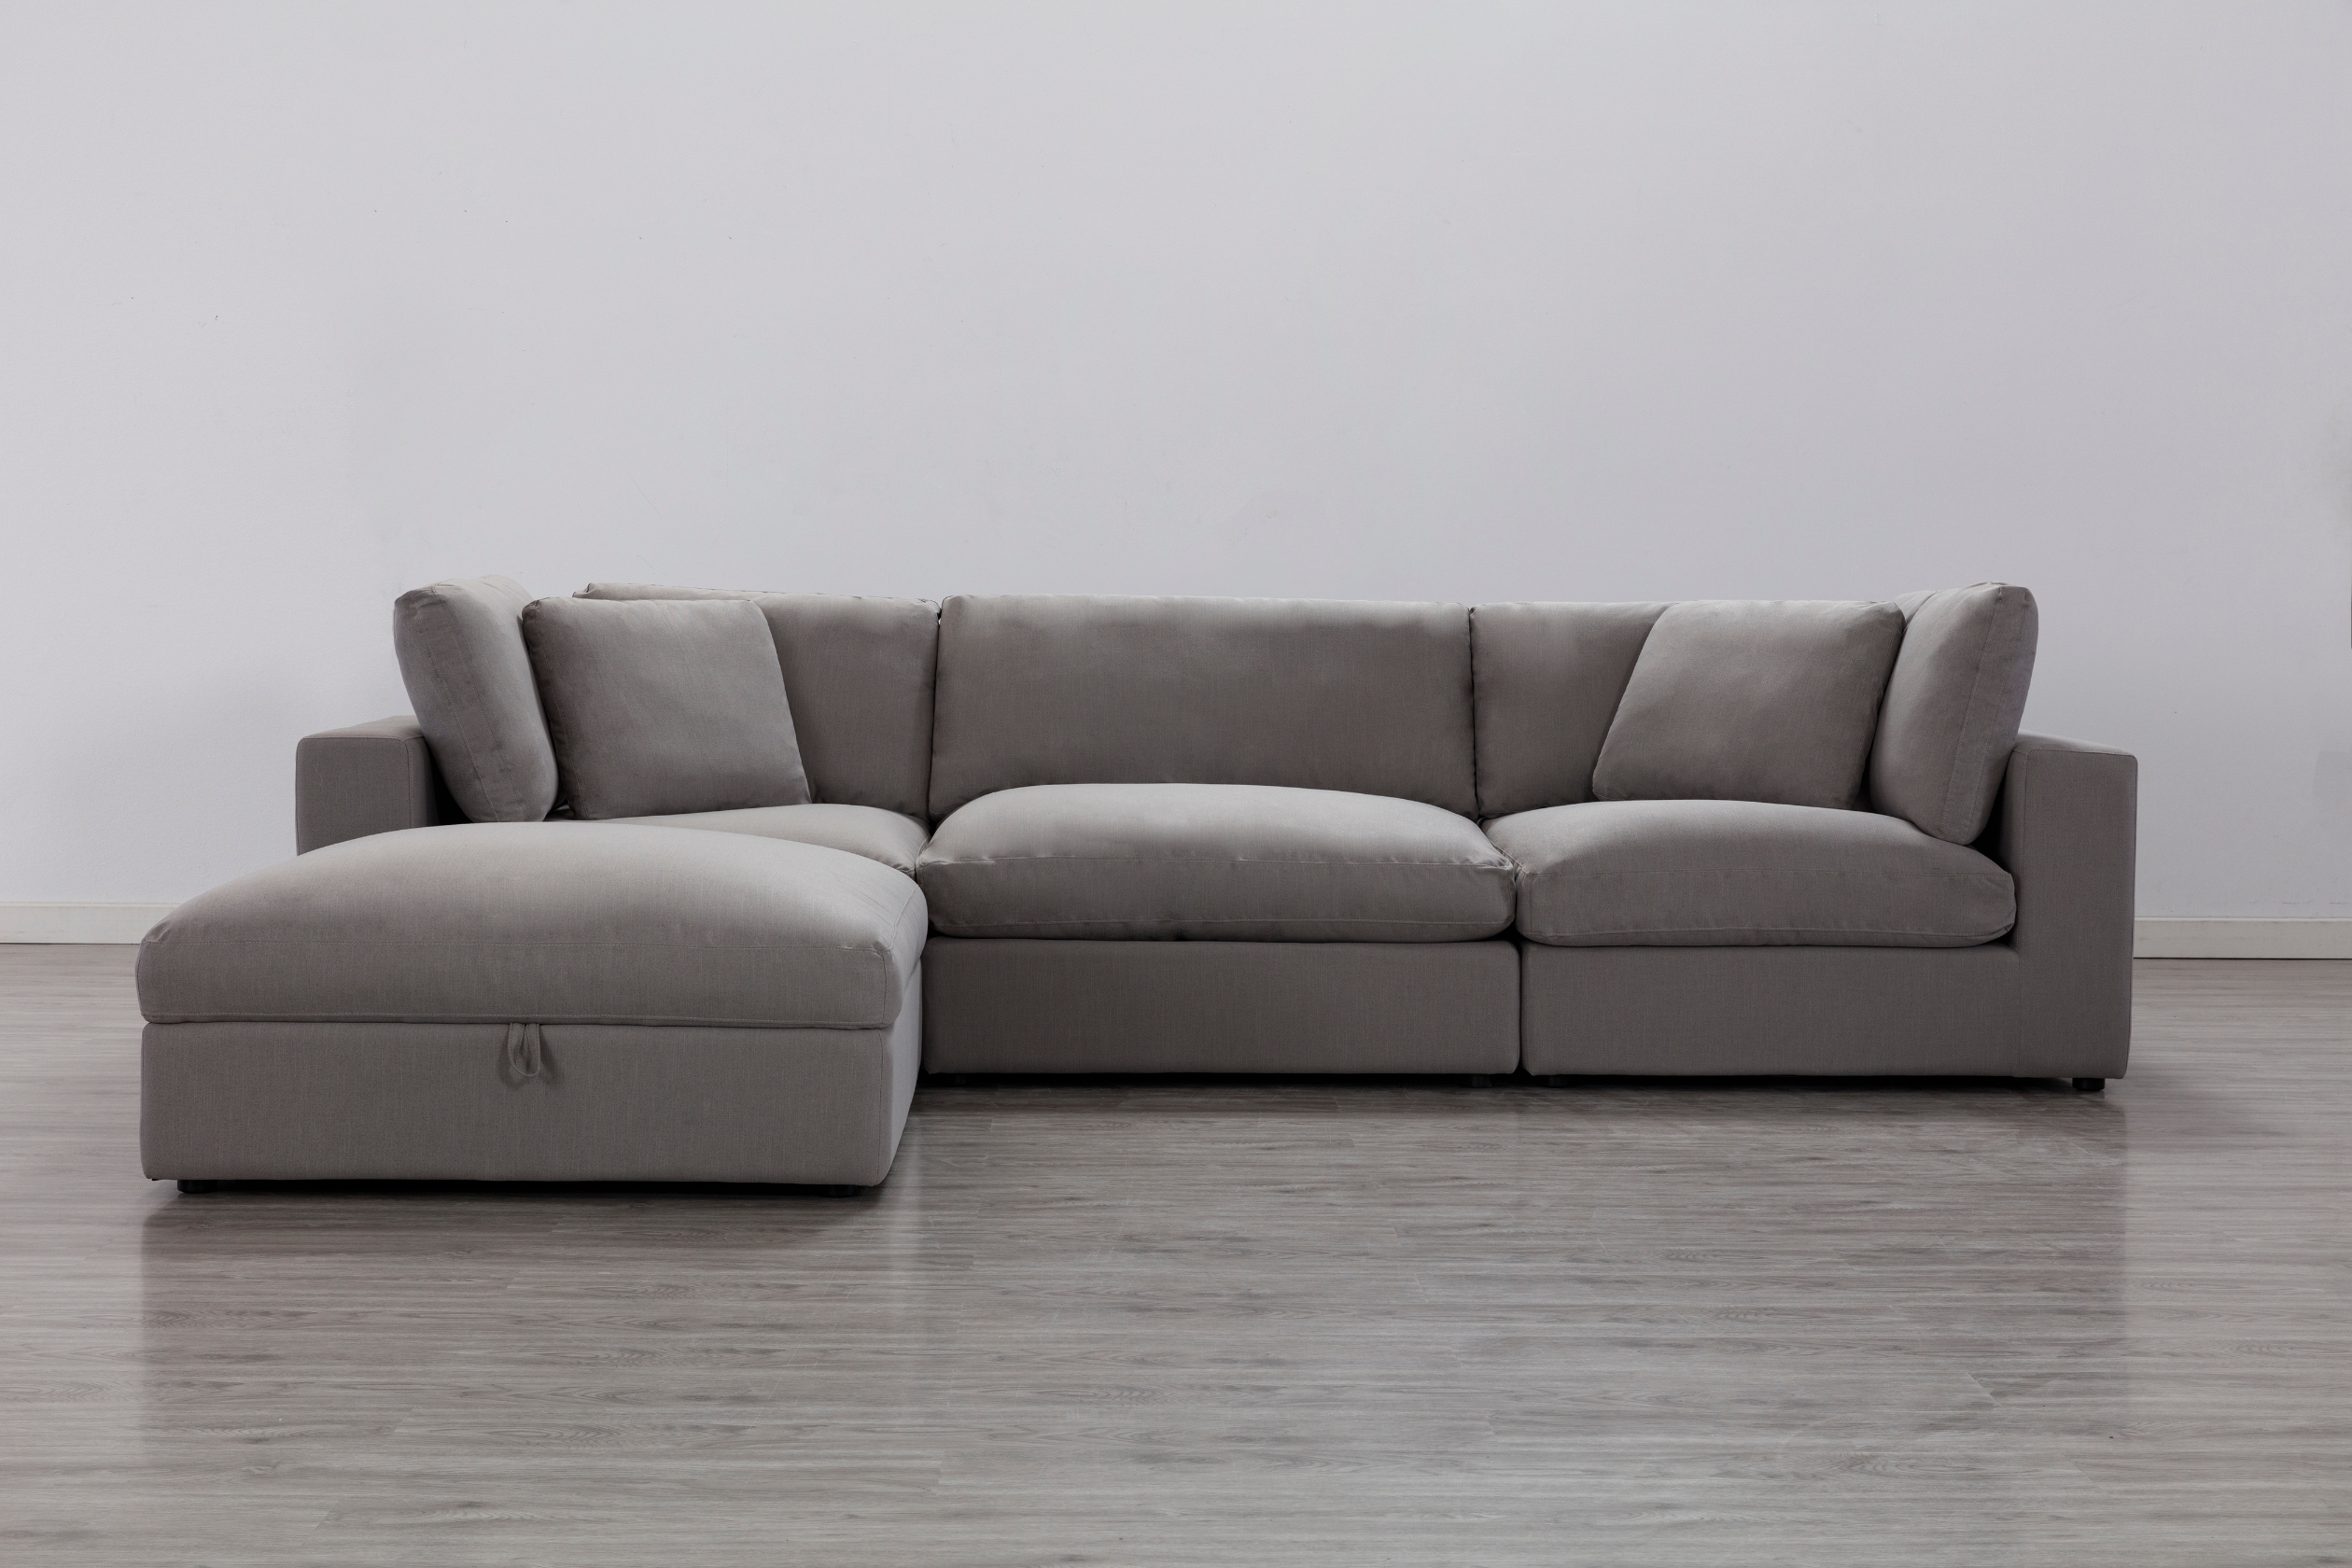 Roundhill Furniture Rivas Contemporary 4-Piece Sectional Sofa - Graphite - image 2 of 9